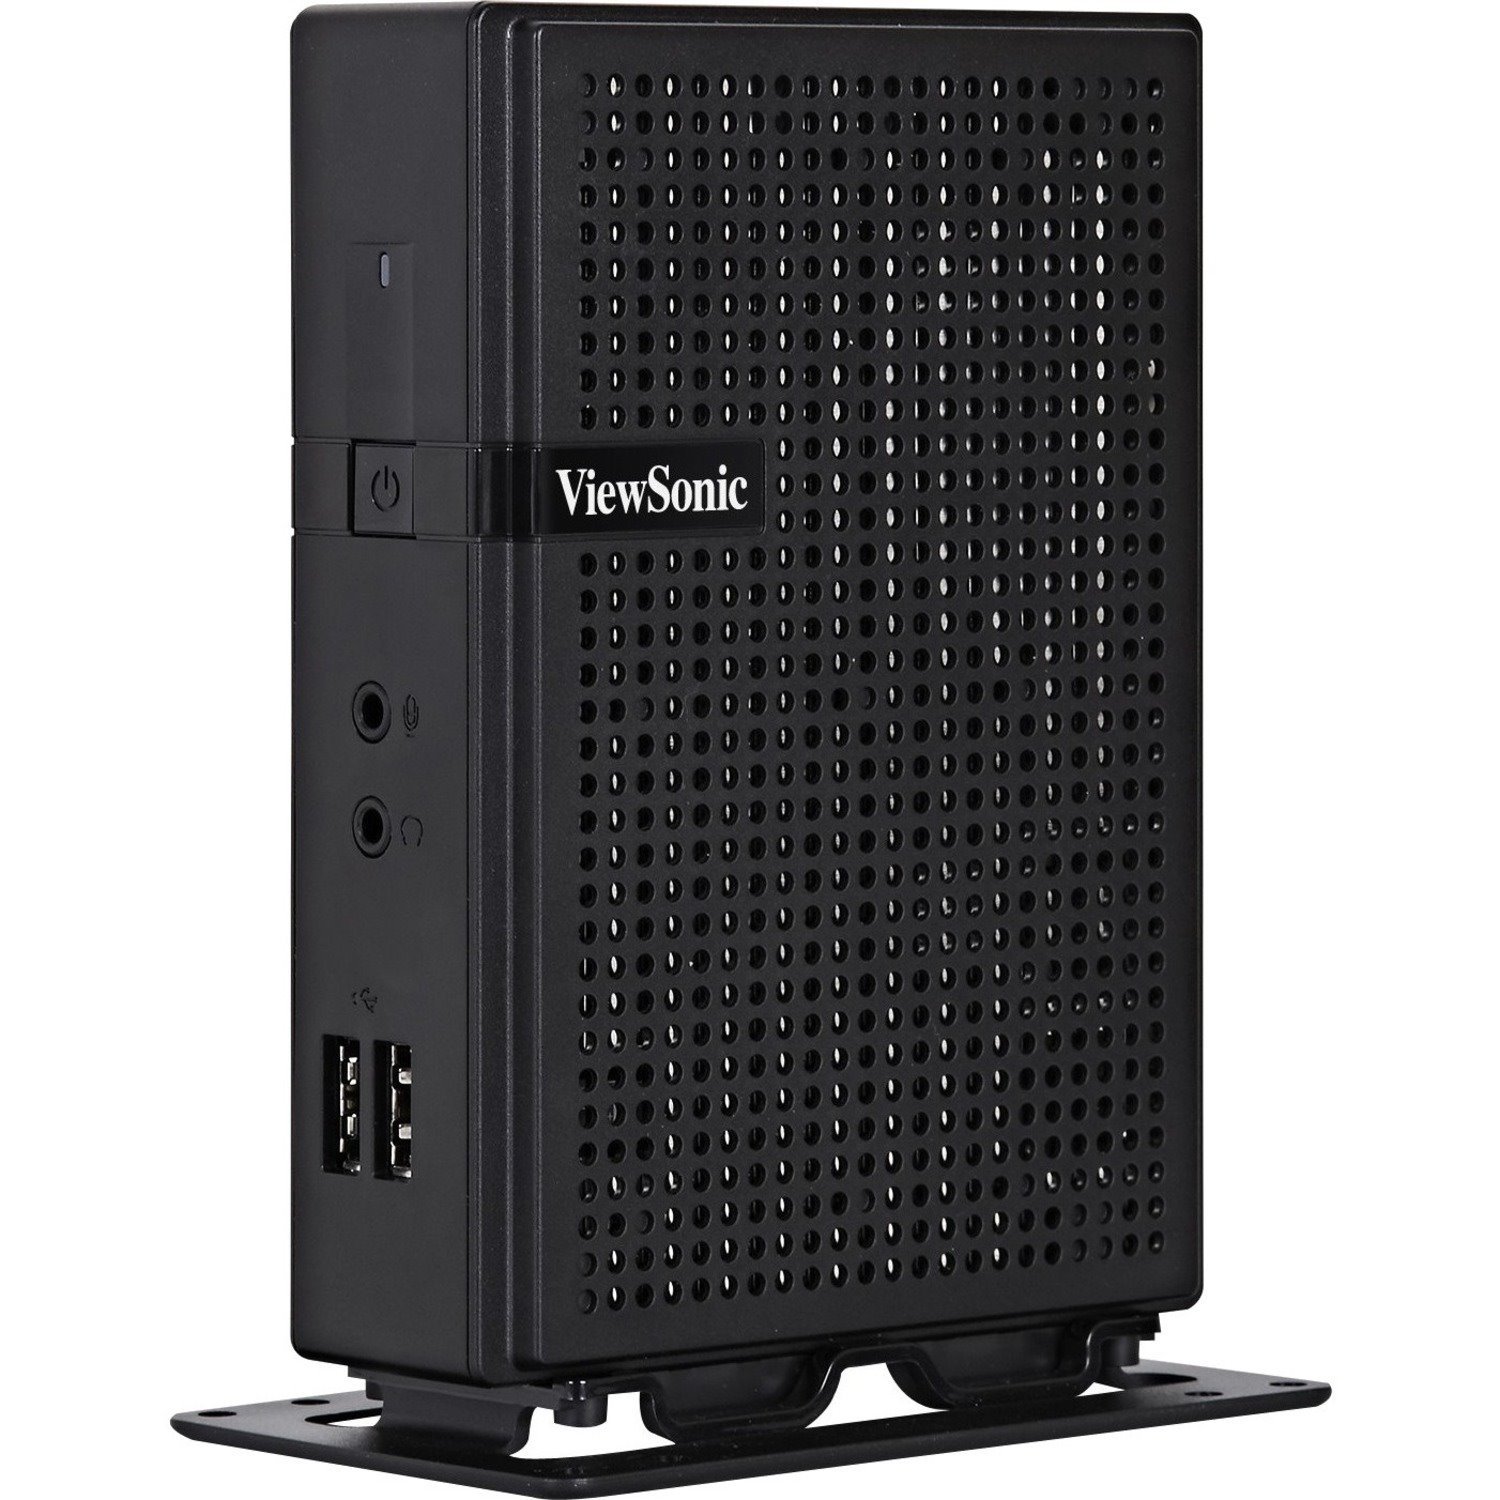 ViewSonic SC-T46 Thin ClientIntel Celeron N2930 Quad-core (4 Core) 1.83 GHz - TAA Compliant